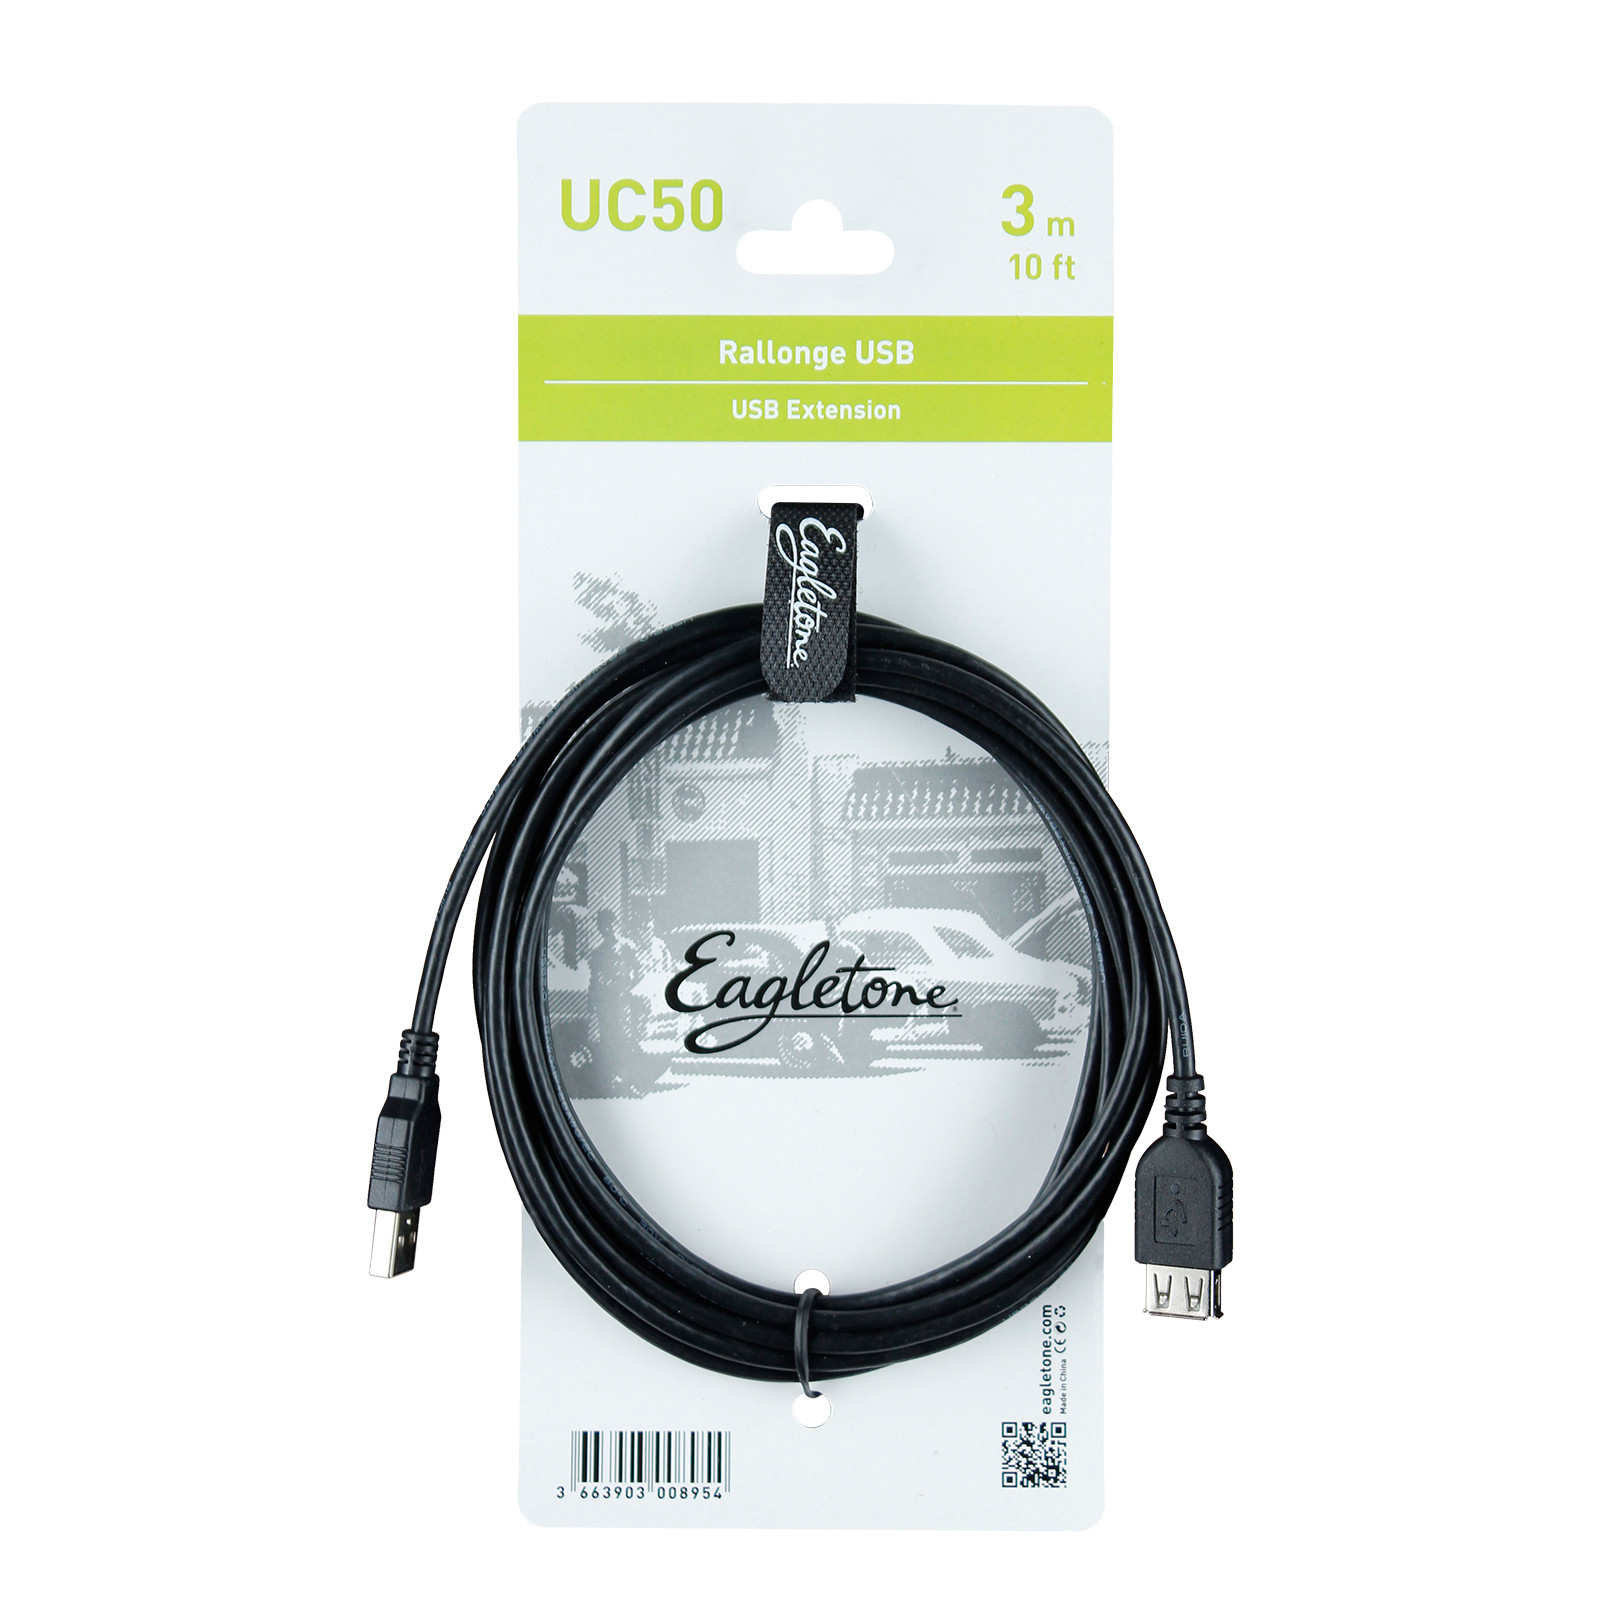 EAGLETONE UC50 - RALLONGE USB - 3M